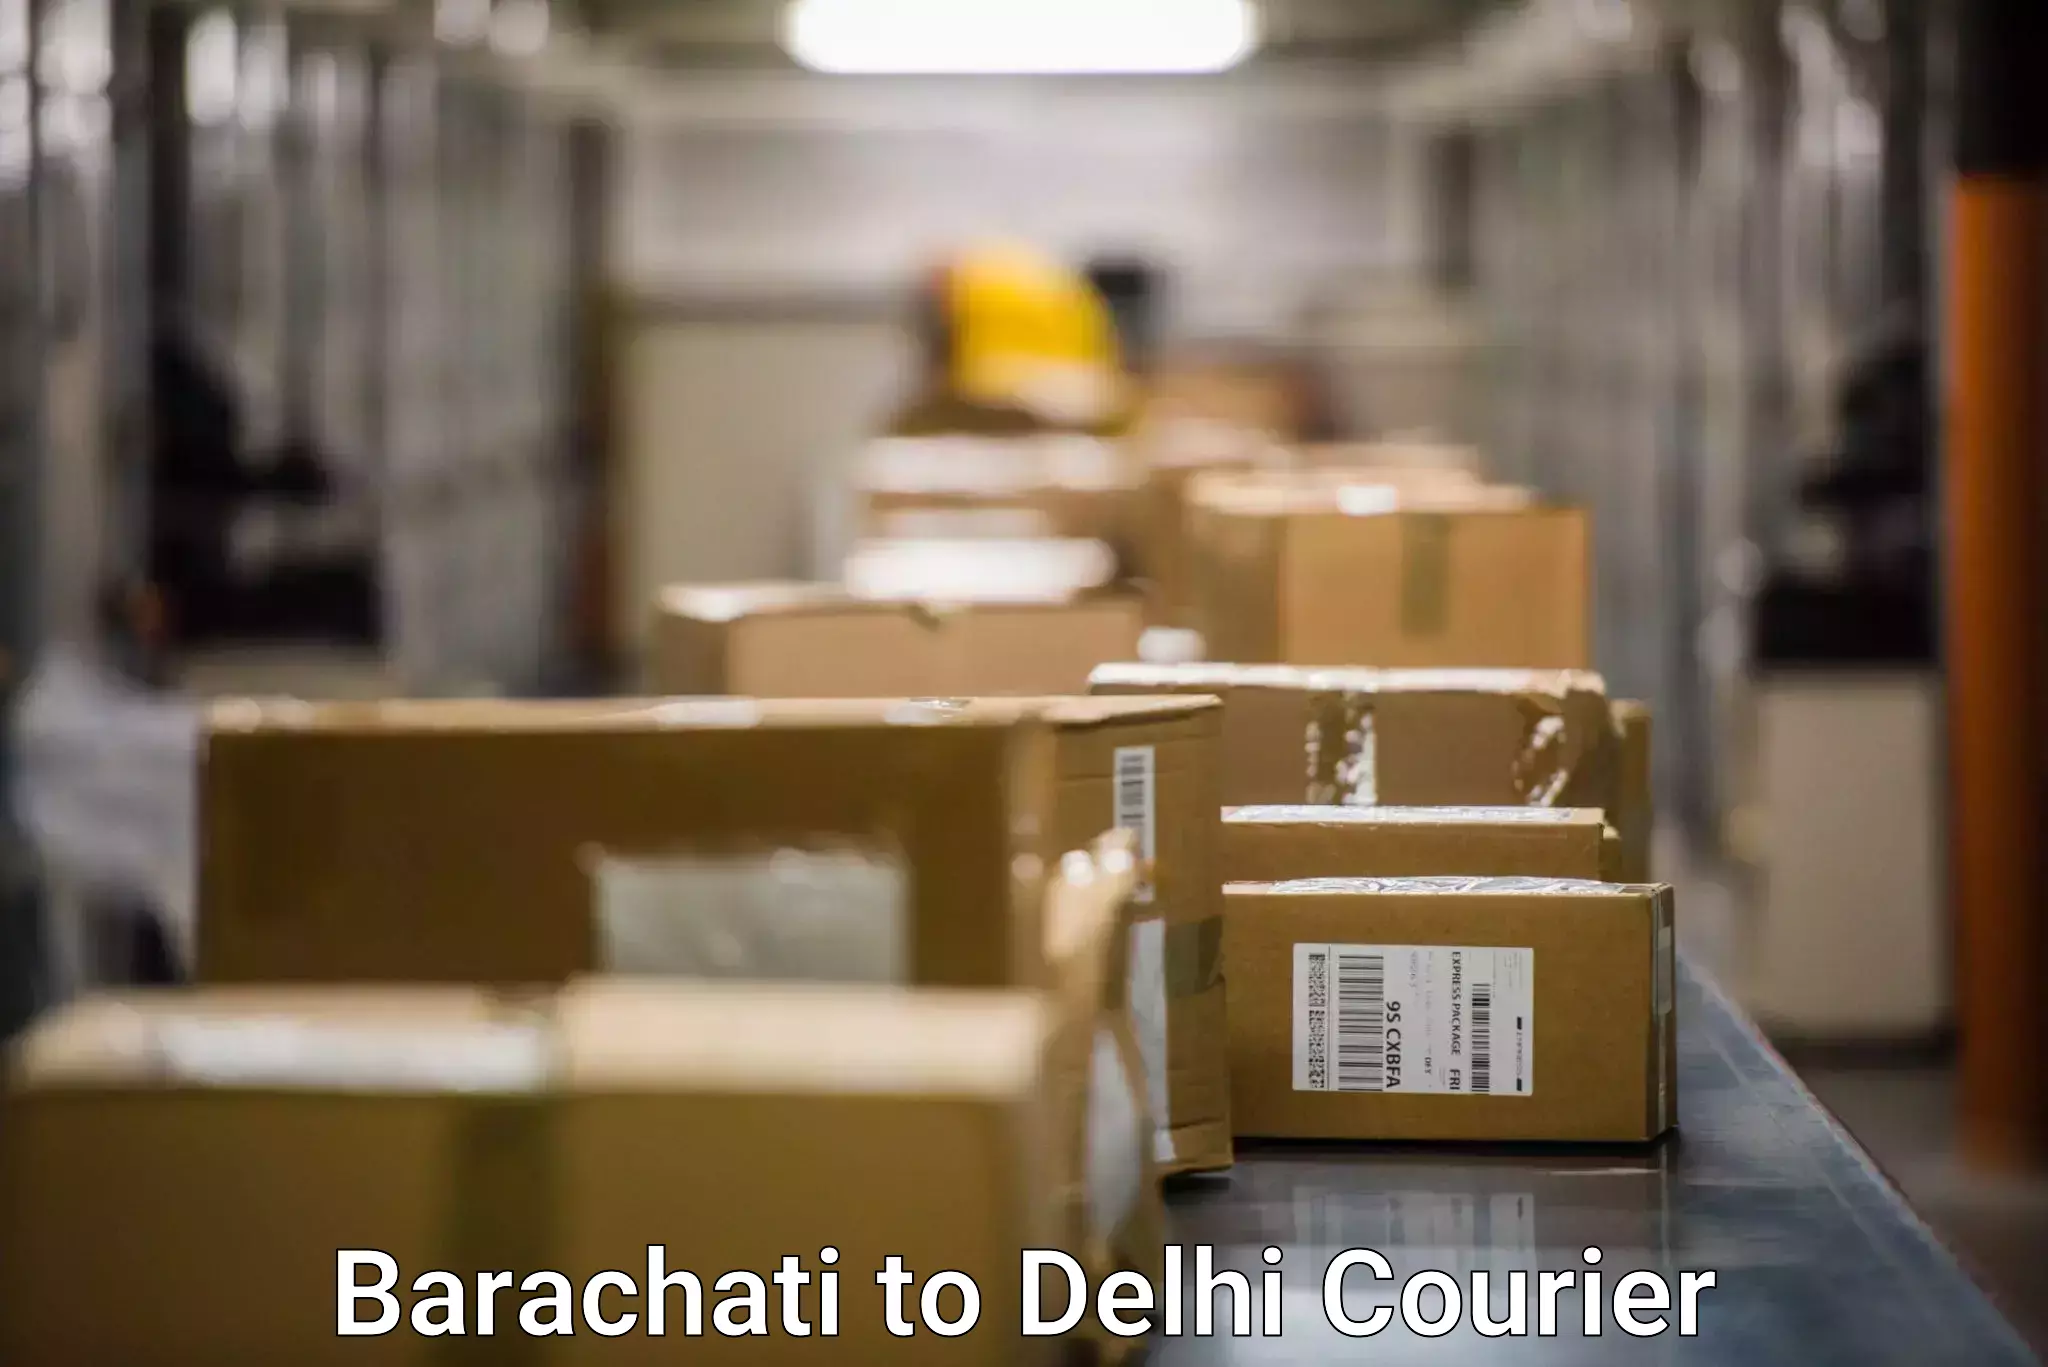 On-demand shipping options Barachati to NCR